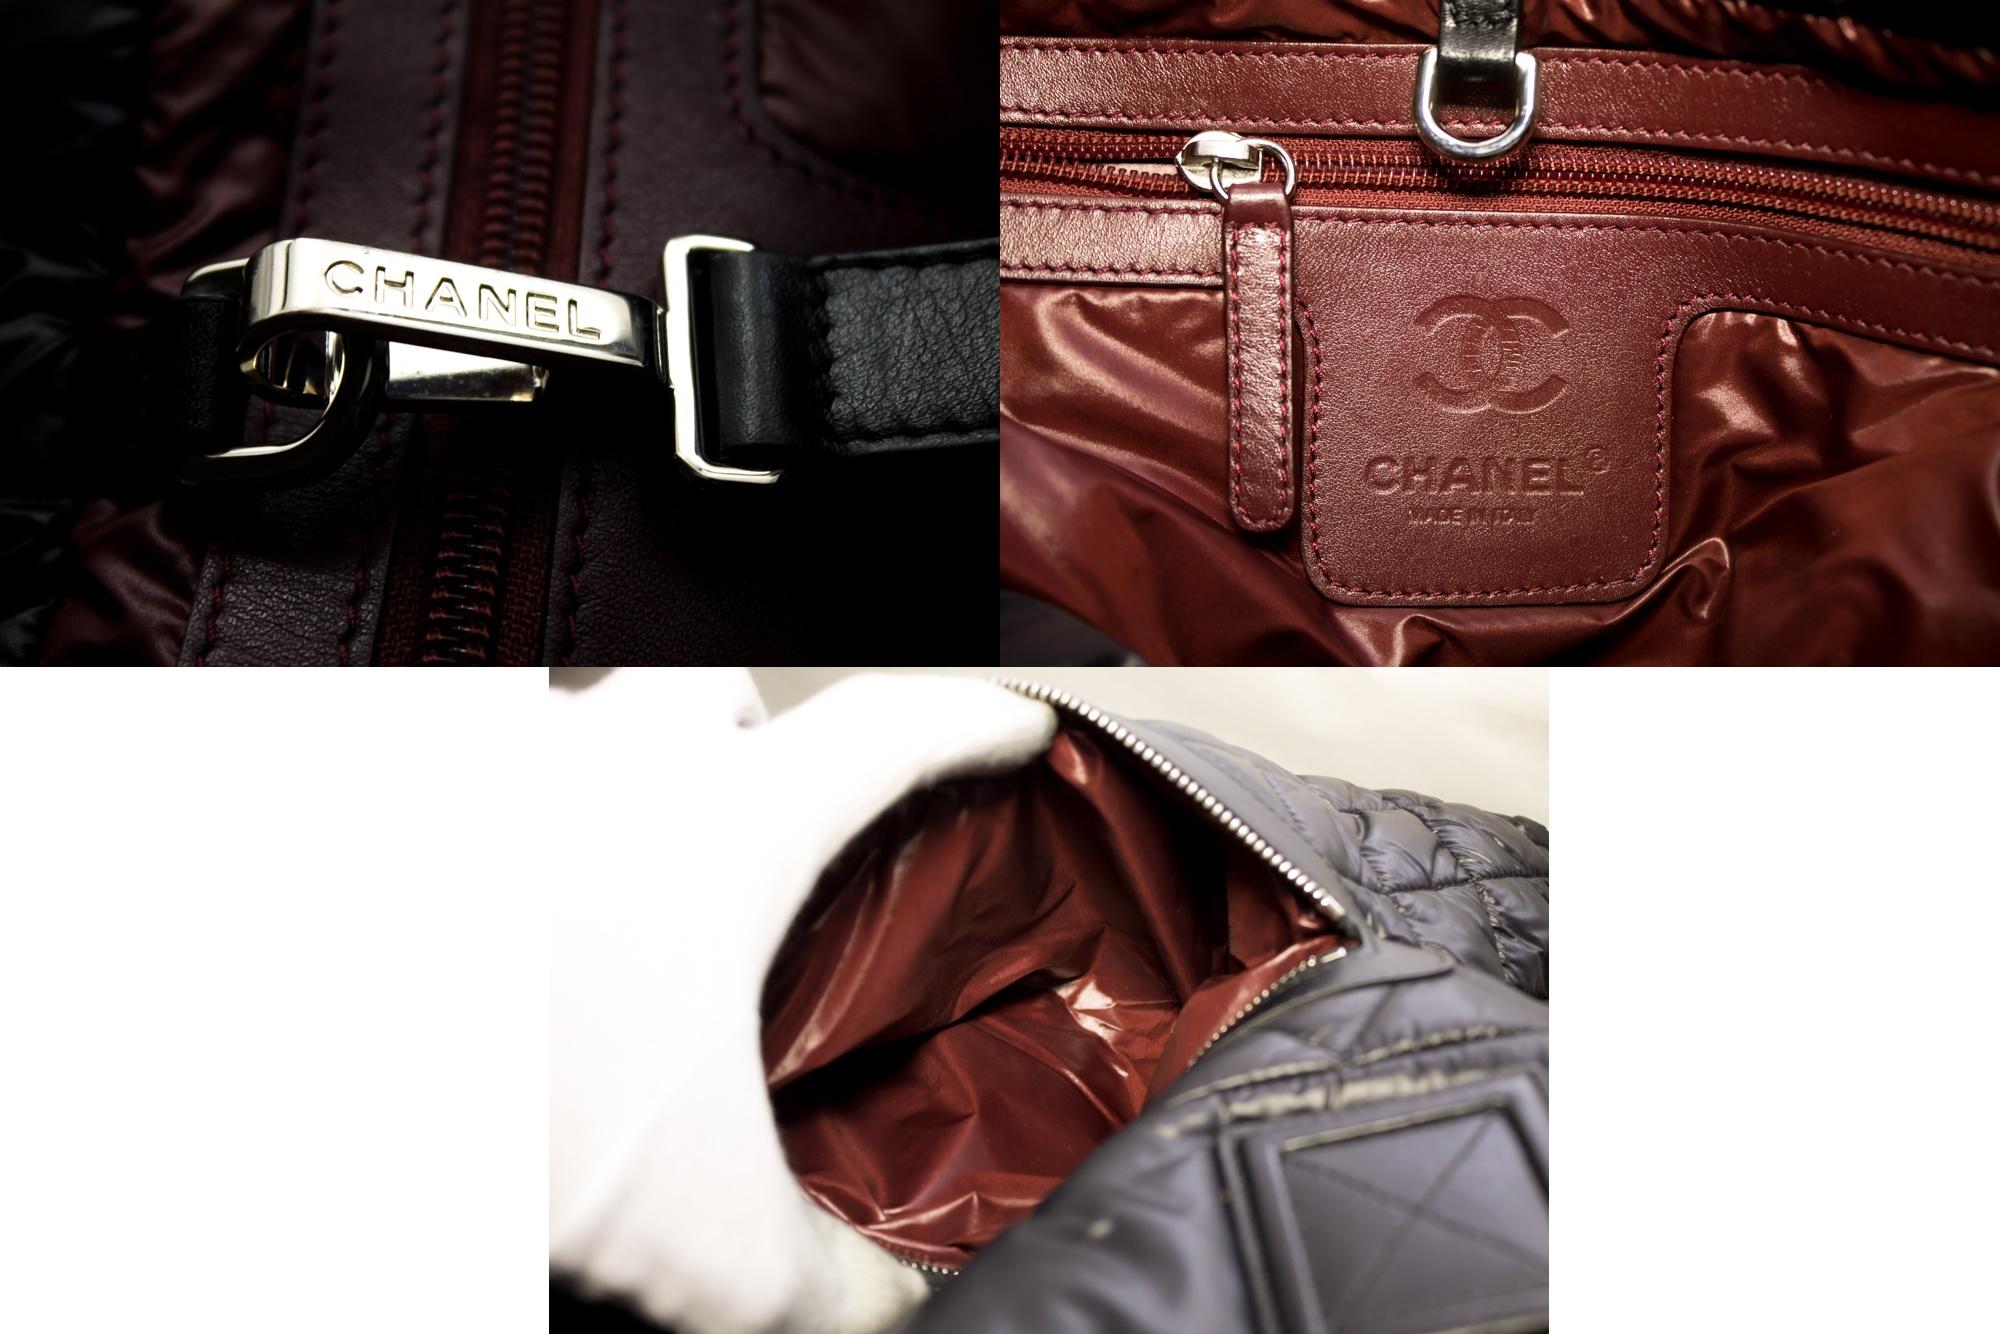 CHANEL Coco Cocoon Nylon Tote Bag Handbag Black Bordeaux Leather 4